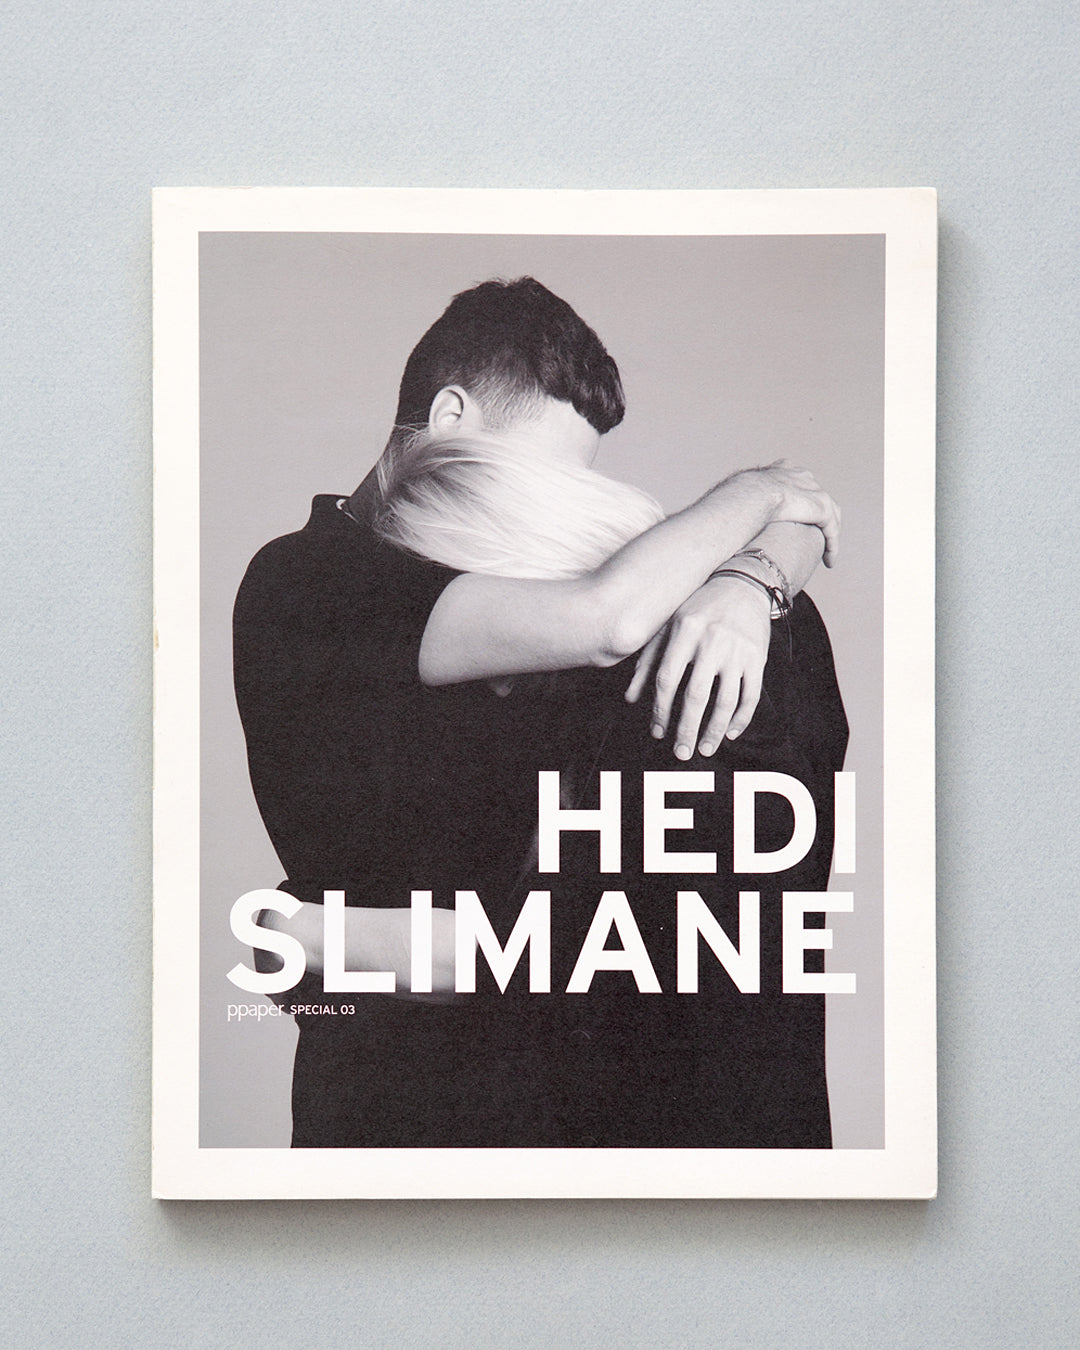 Hedi Slimane - ppaper Special 03